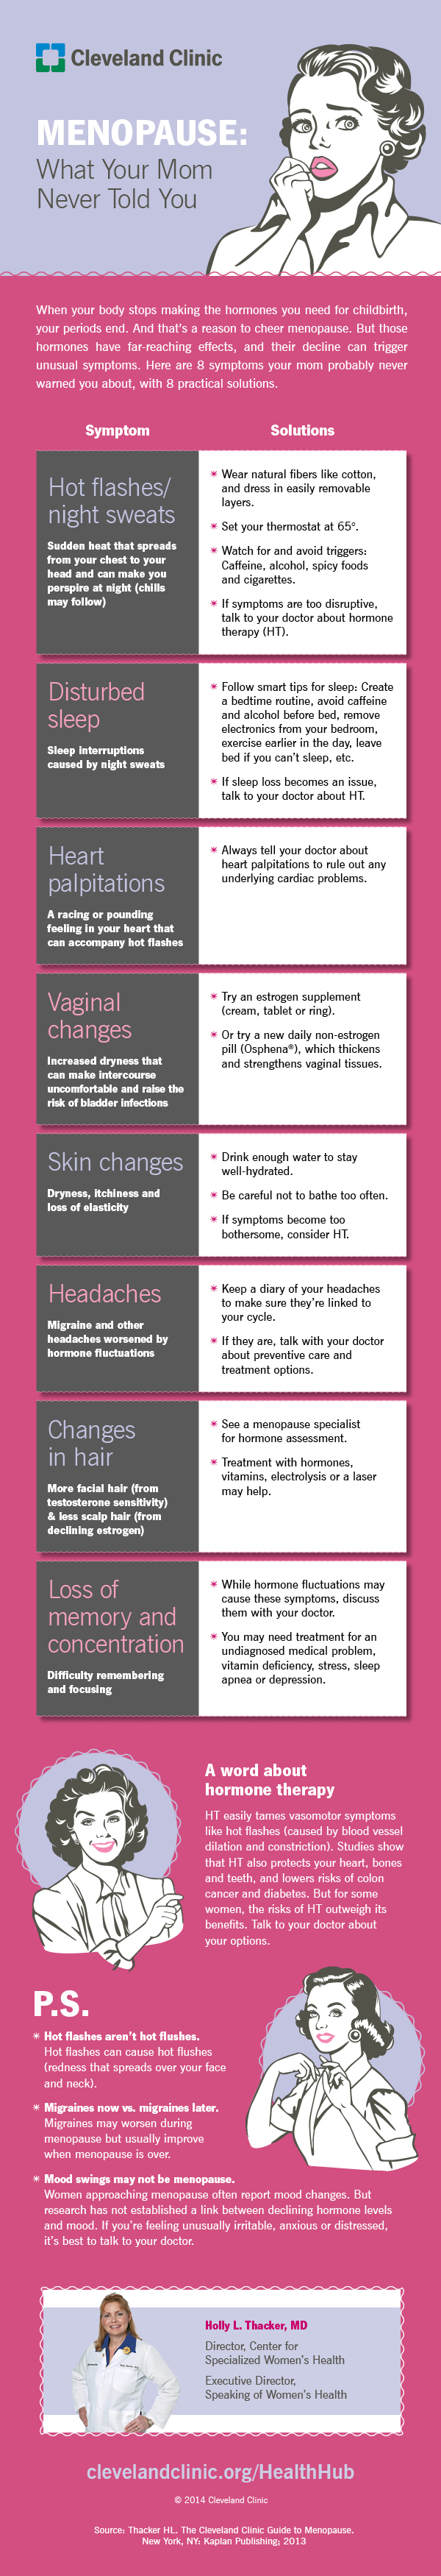 14-HHB-133-Menopause-Infographic_FNL1